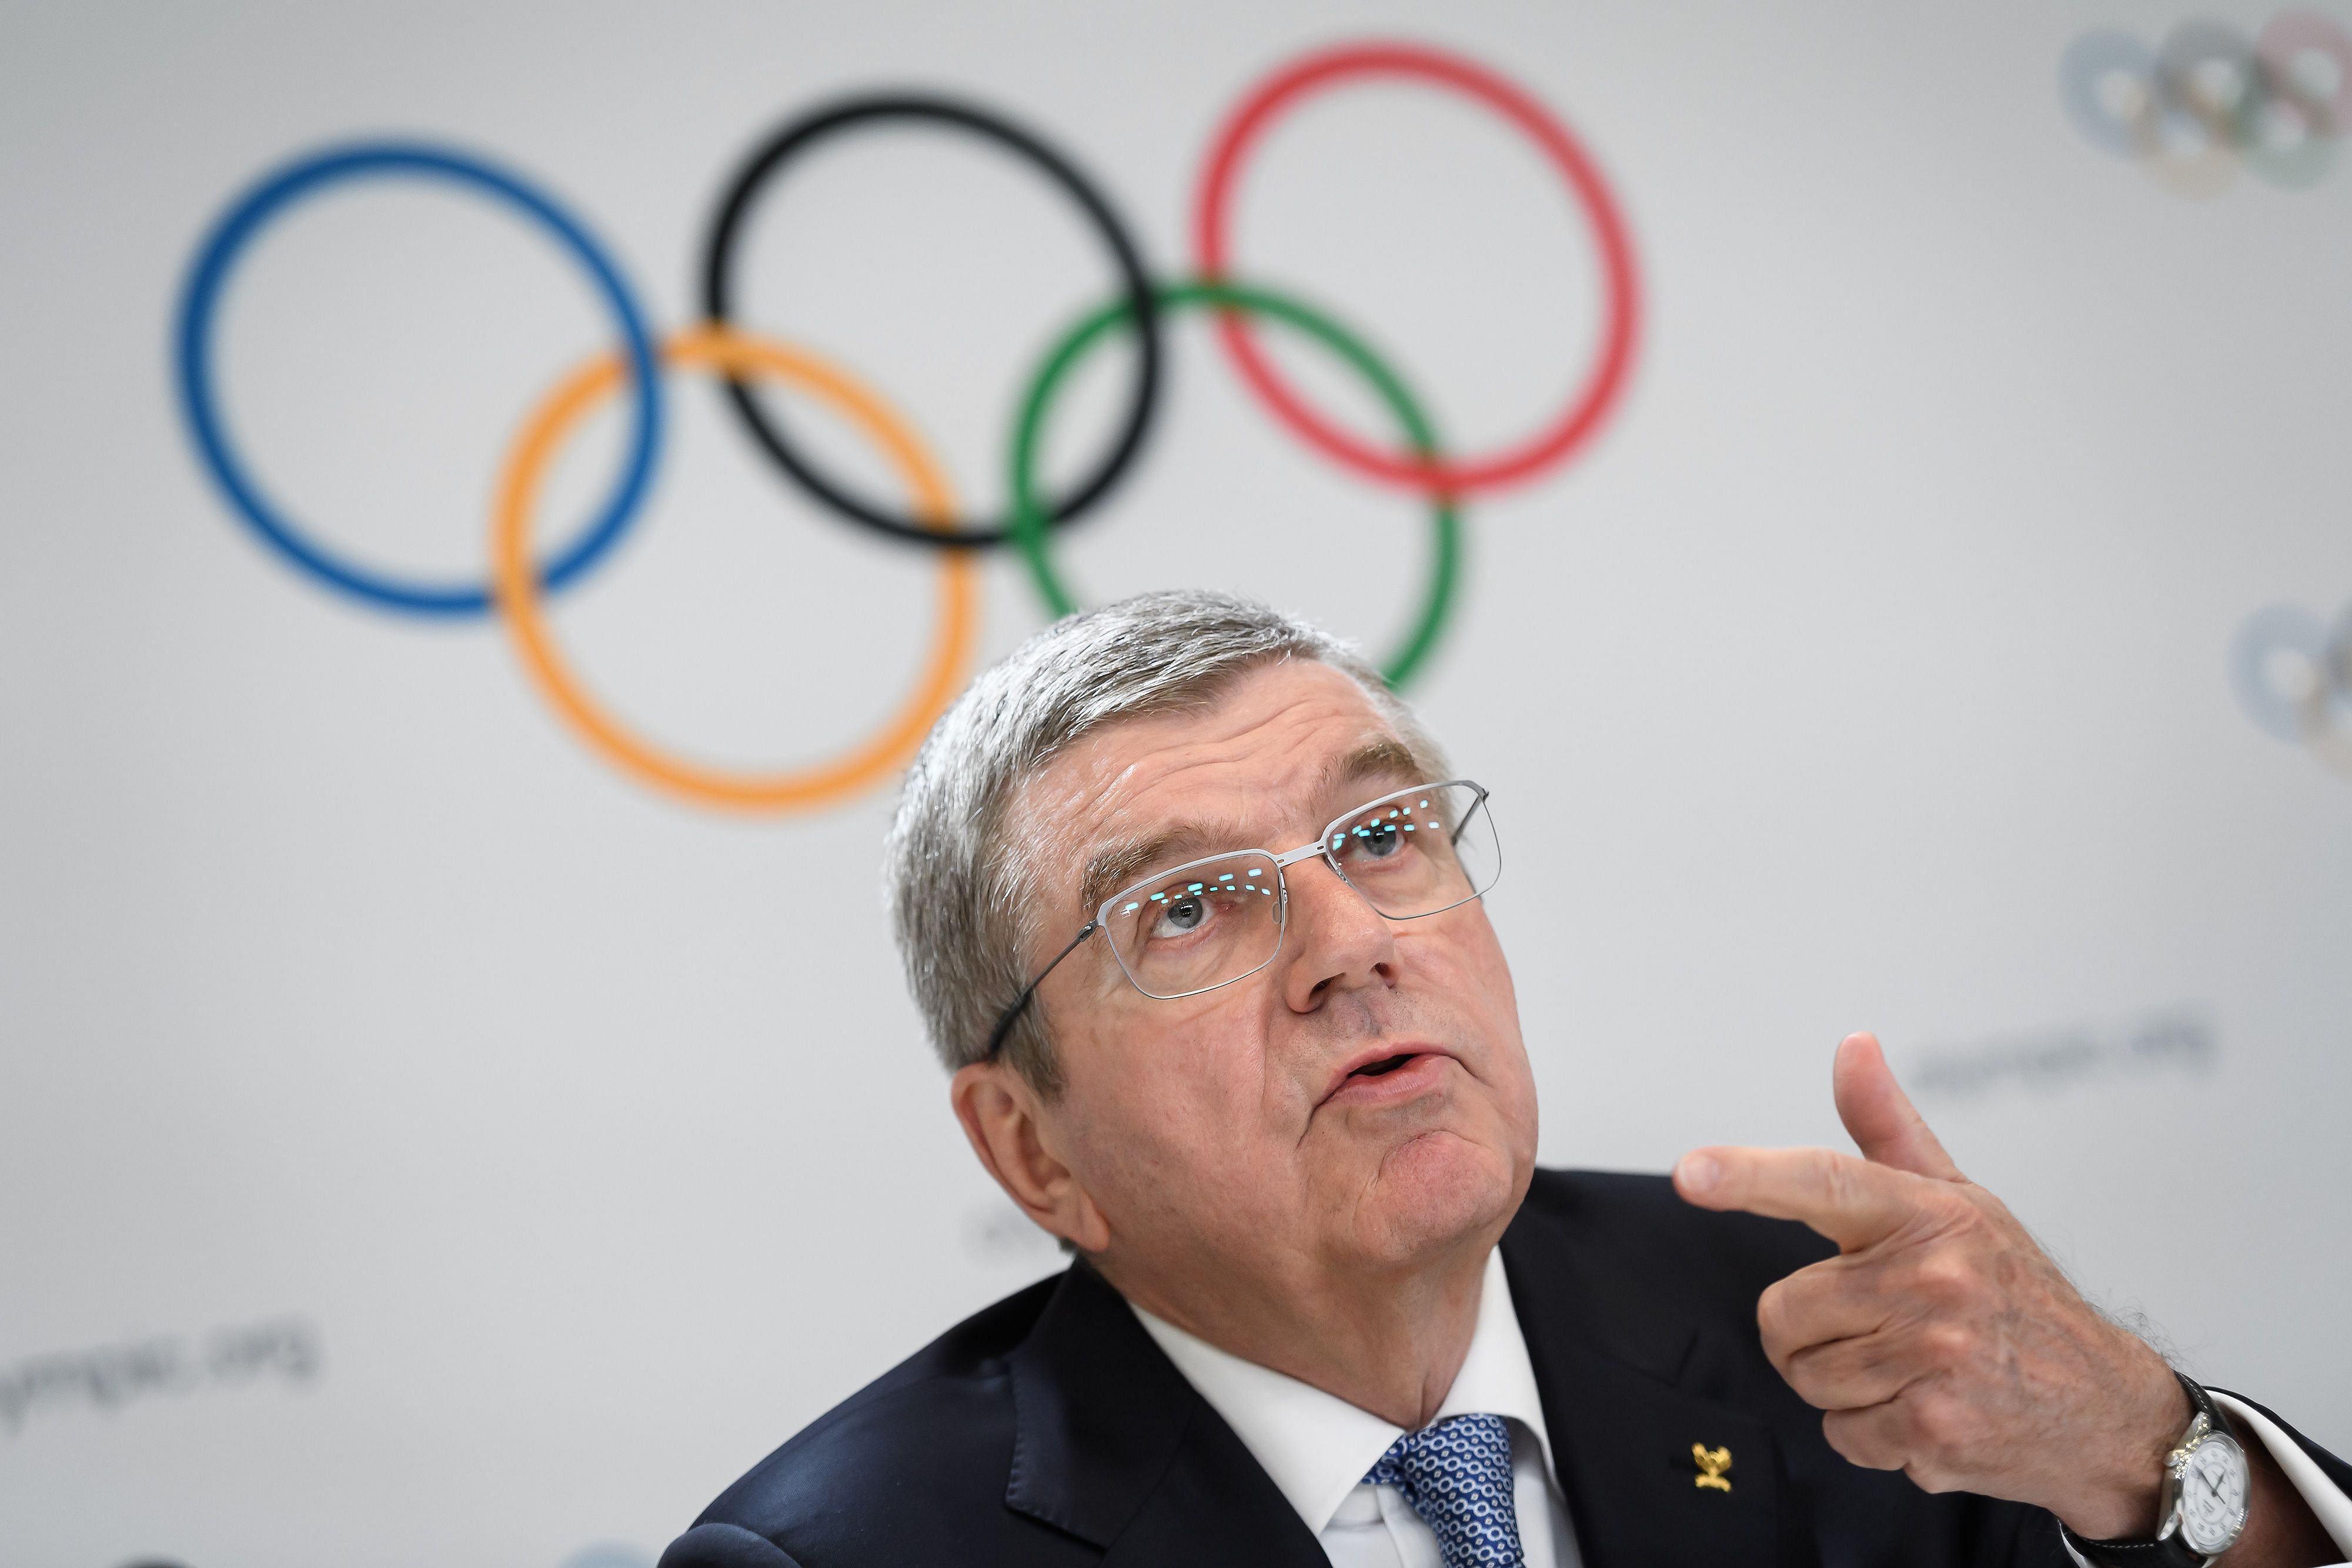  International Olympic Committee (IOC) President Thomas Bach. (AFP Photo)